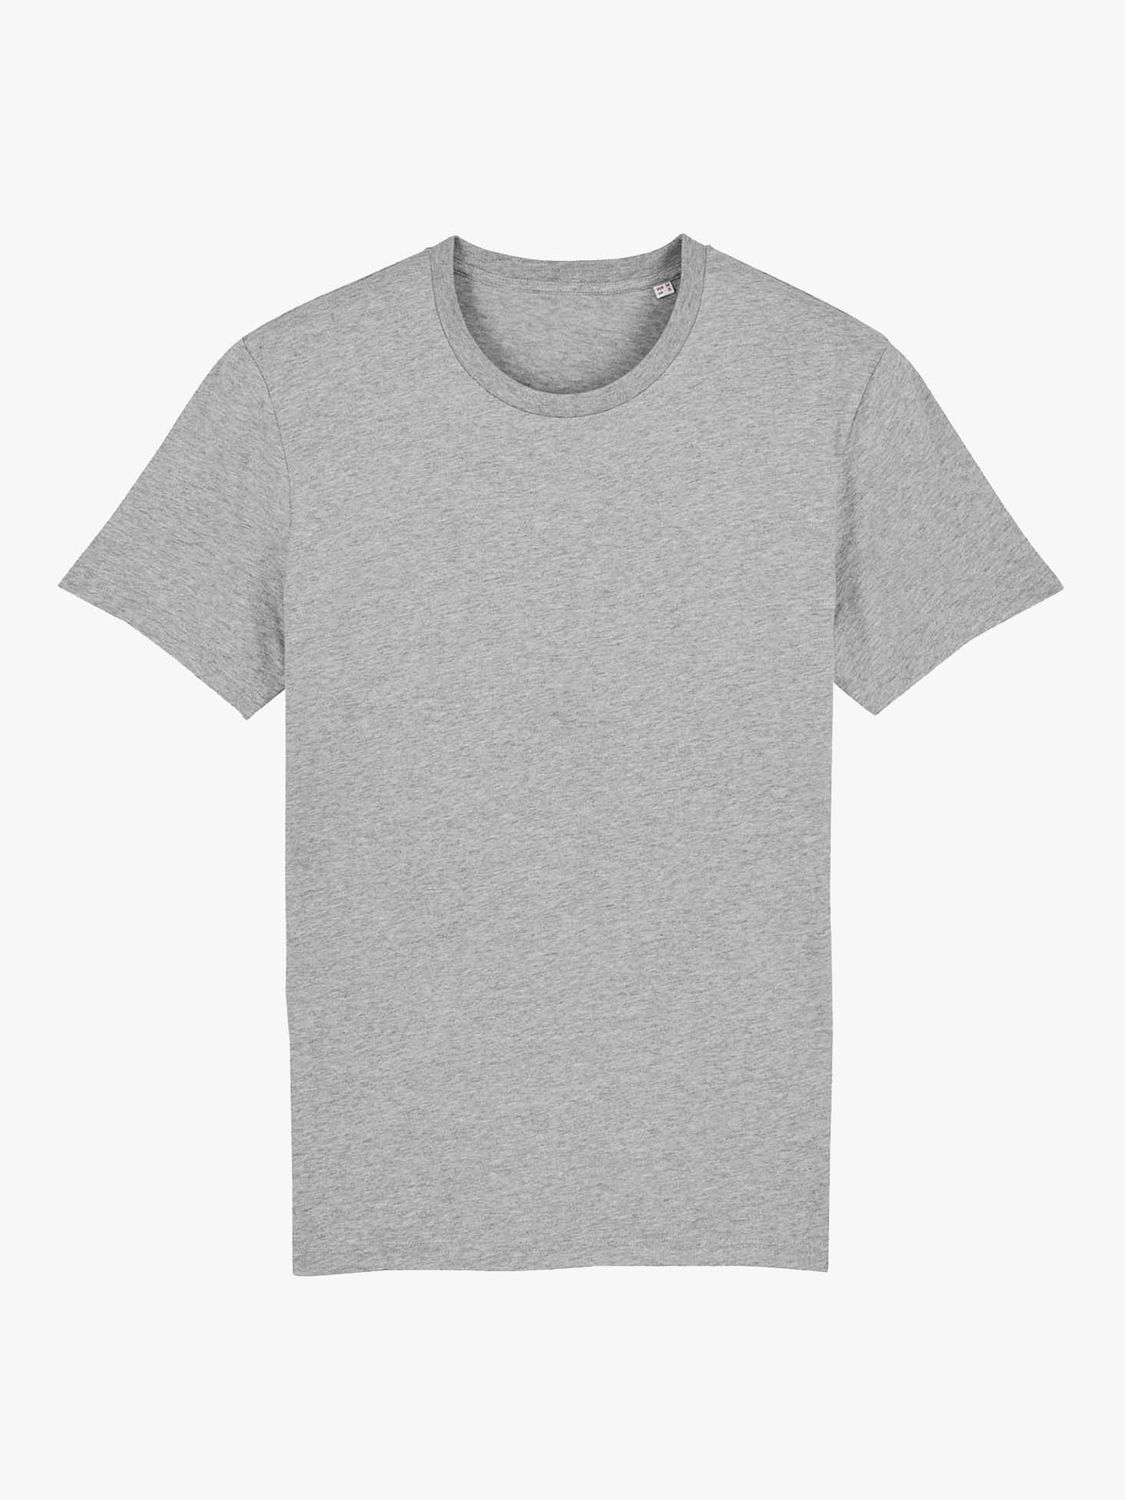 British Boxers GOTS Organic Short Sleeve Lounge T-Shirt, Grey Marl, S